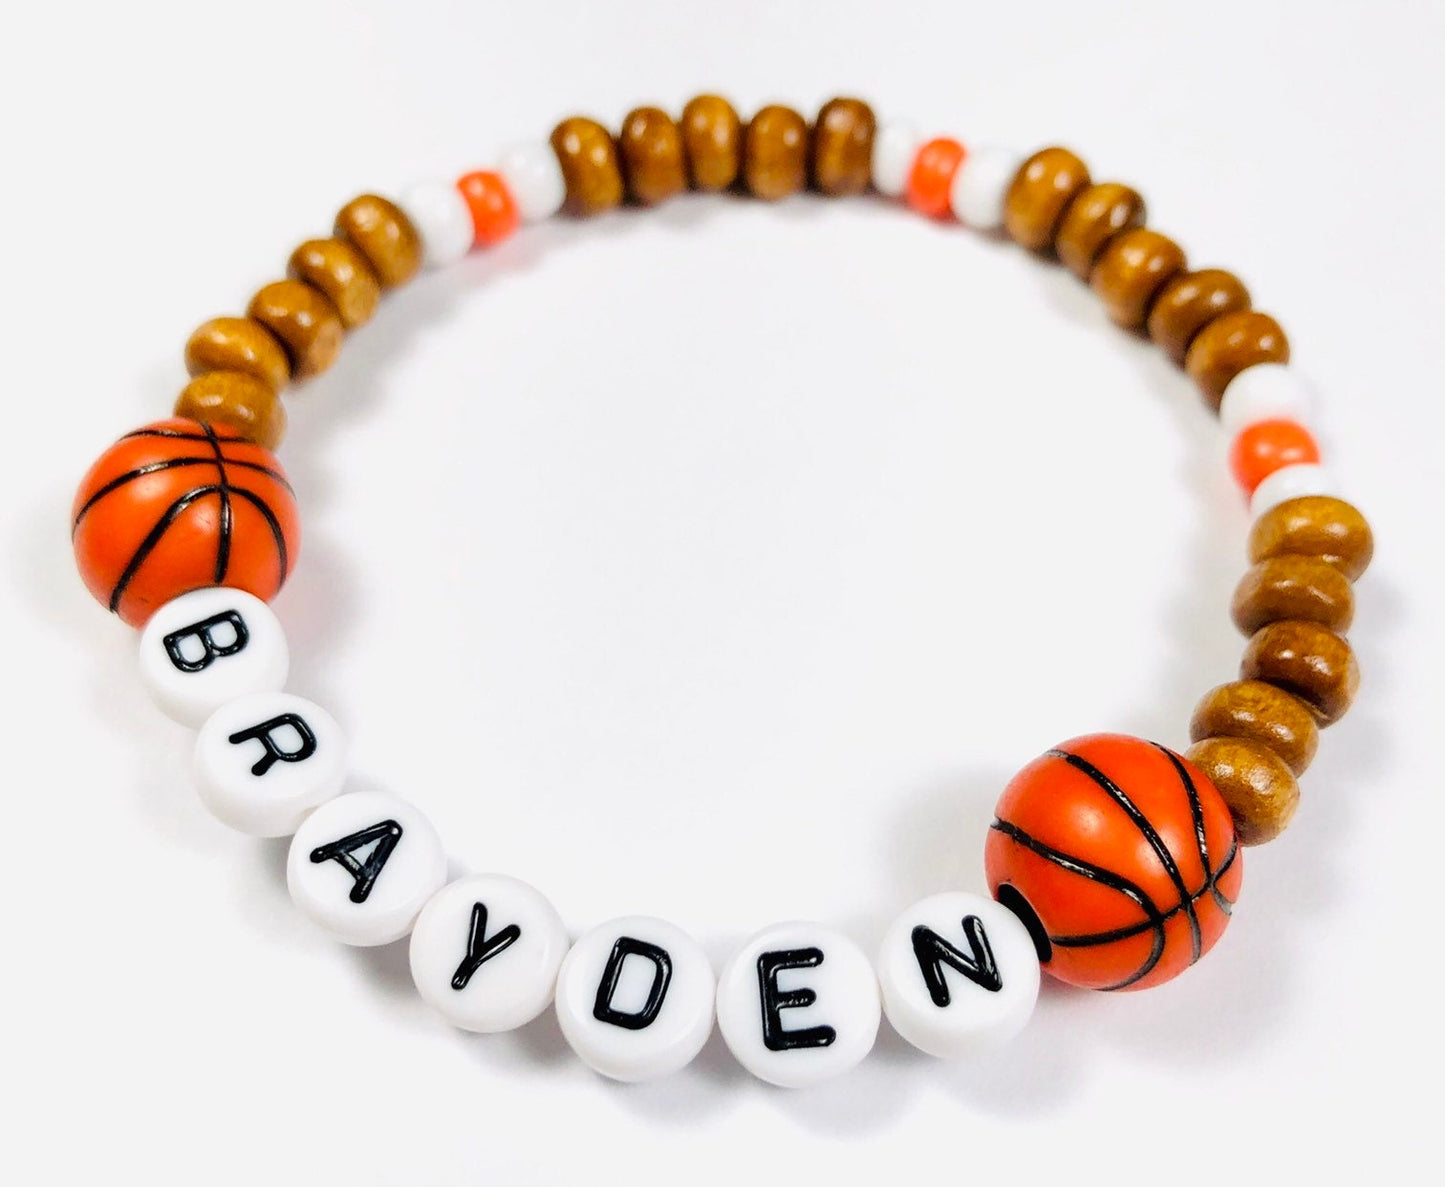 Soccer bracelet for boys / soccer bracelet for kids / kids jewelry / wooden kids bracelet